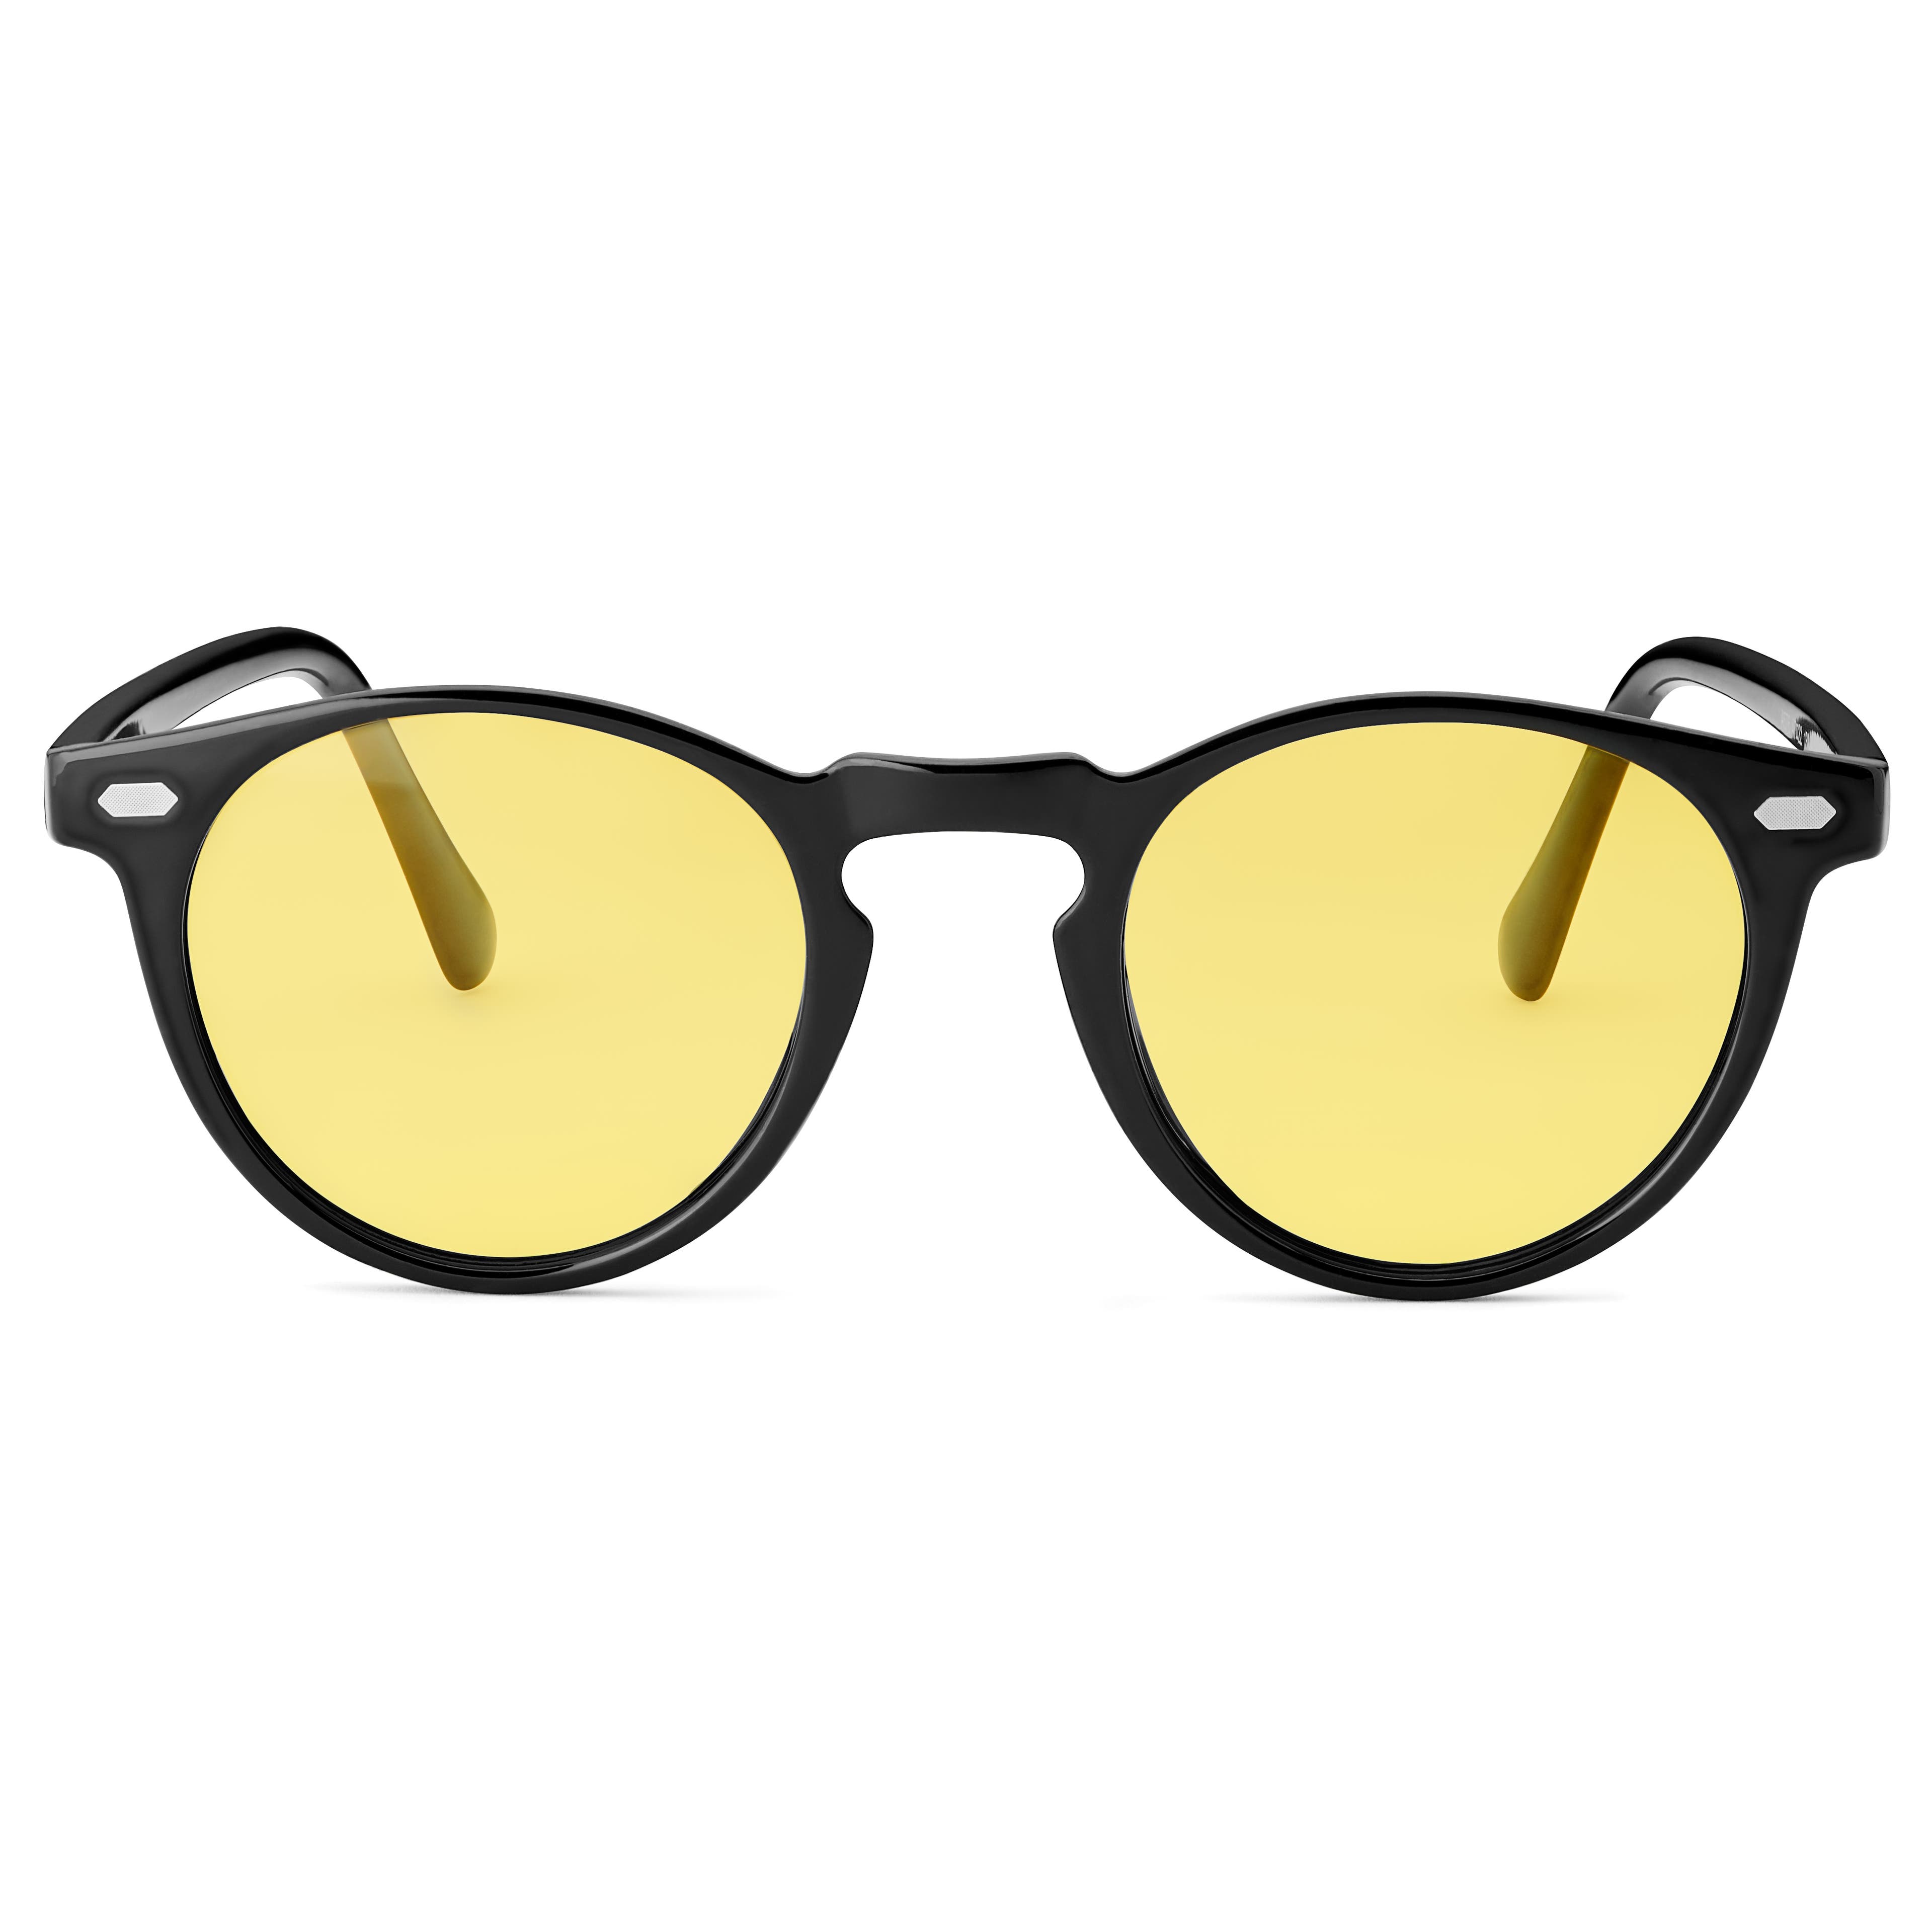 Ochelari de soare retro rotunzi negri cu lentile polarizate galbene